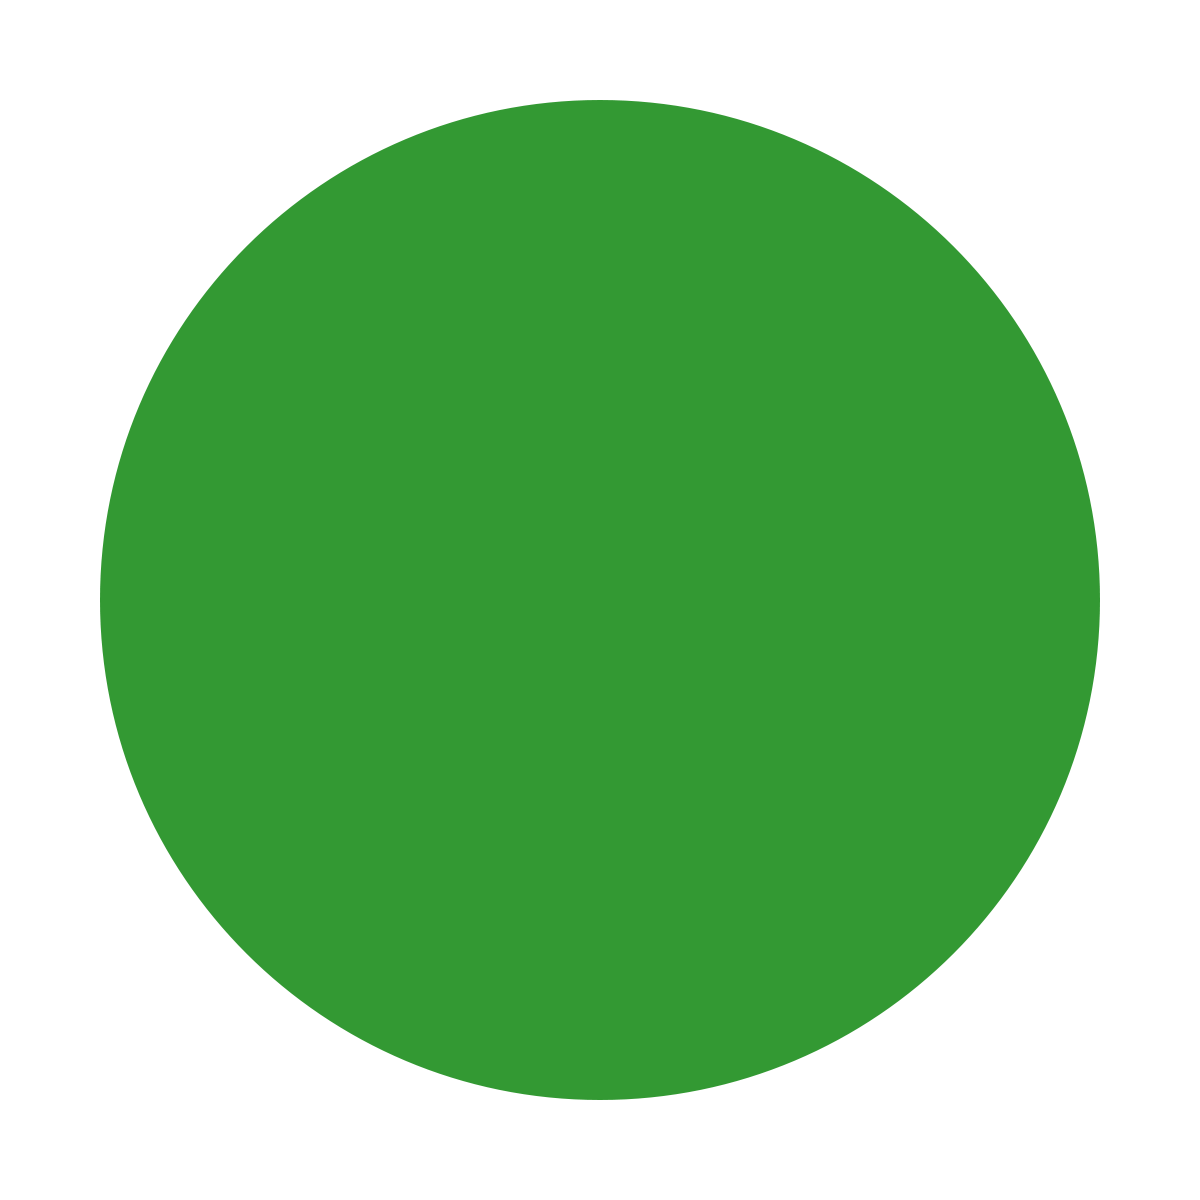 1200px-Ski_trail_rating_symbol-green_circle